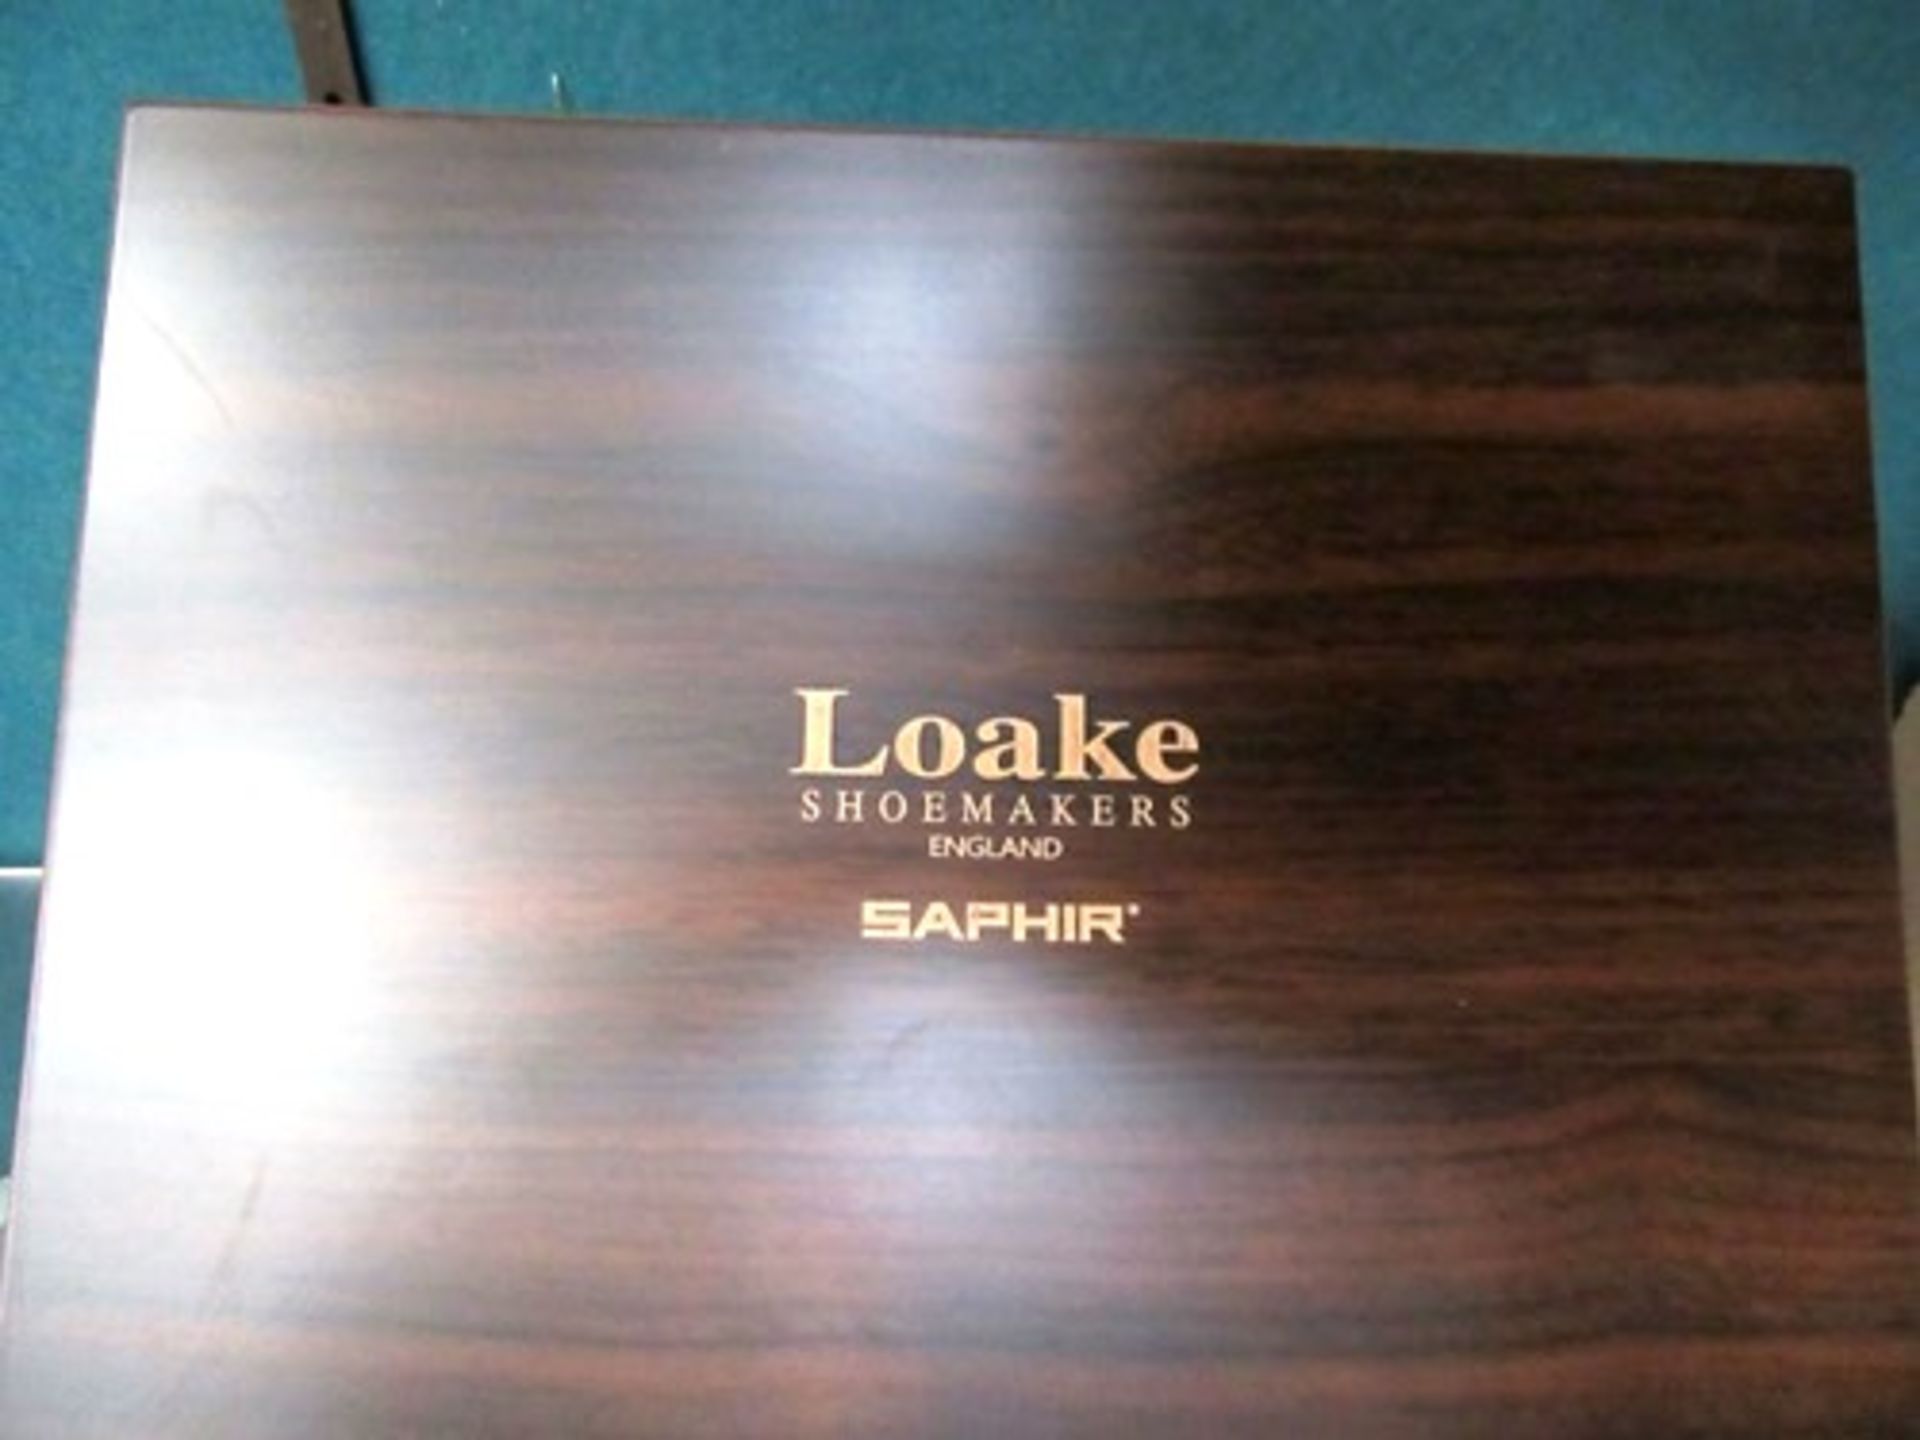 1 x Loake shoemakers valet box walnut, containing shoe polish in various colours, brushes, - Image 2 of 5